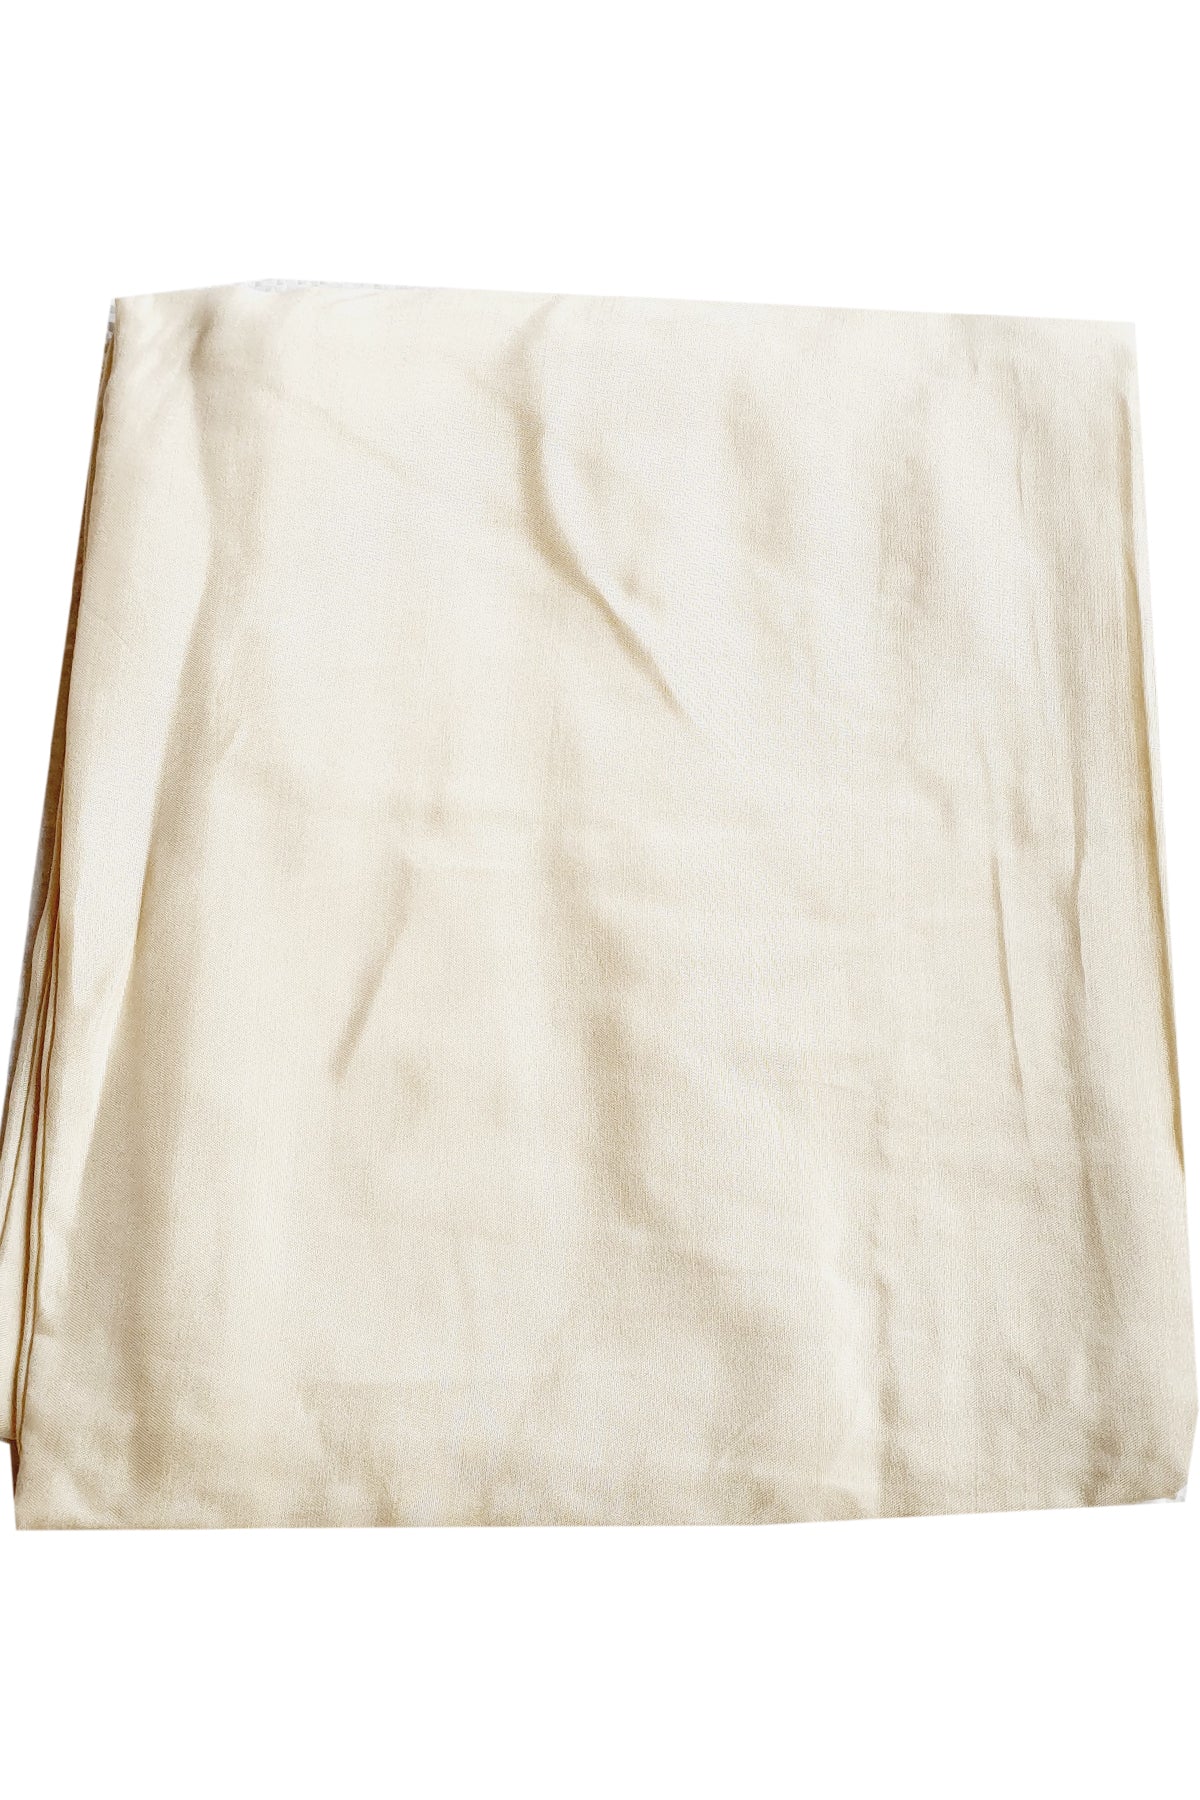 Cream Muslin Cotton Printed Suit Set